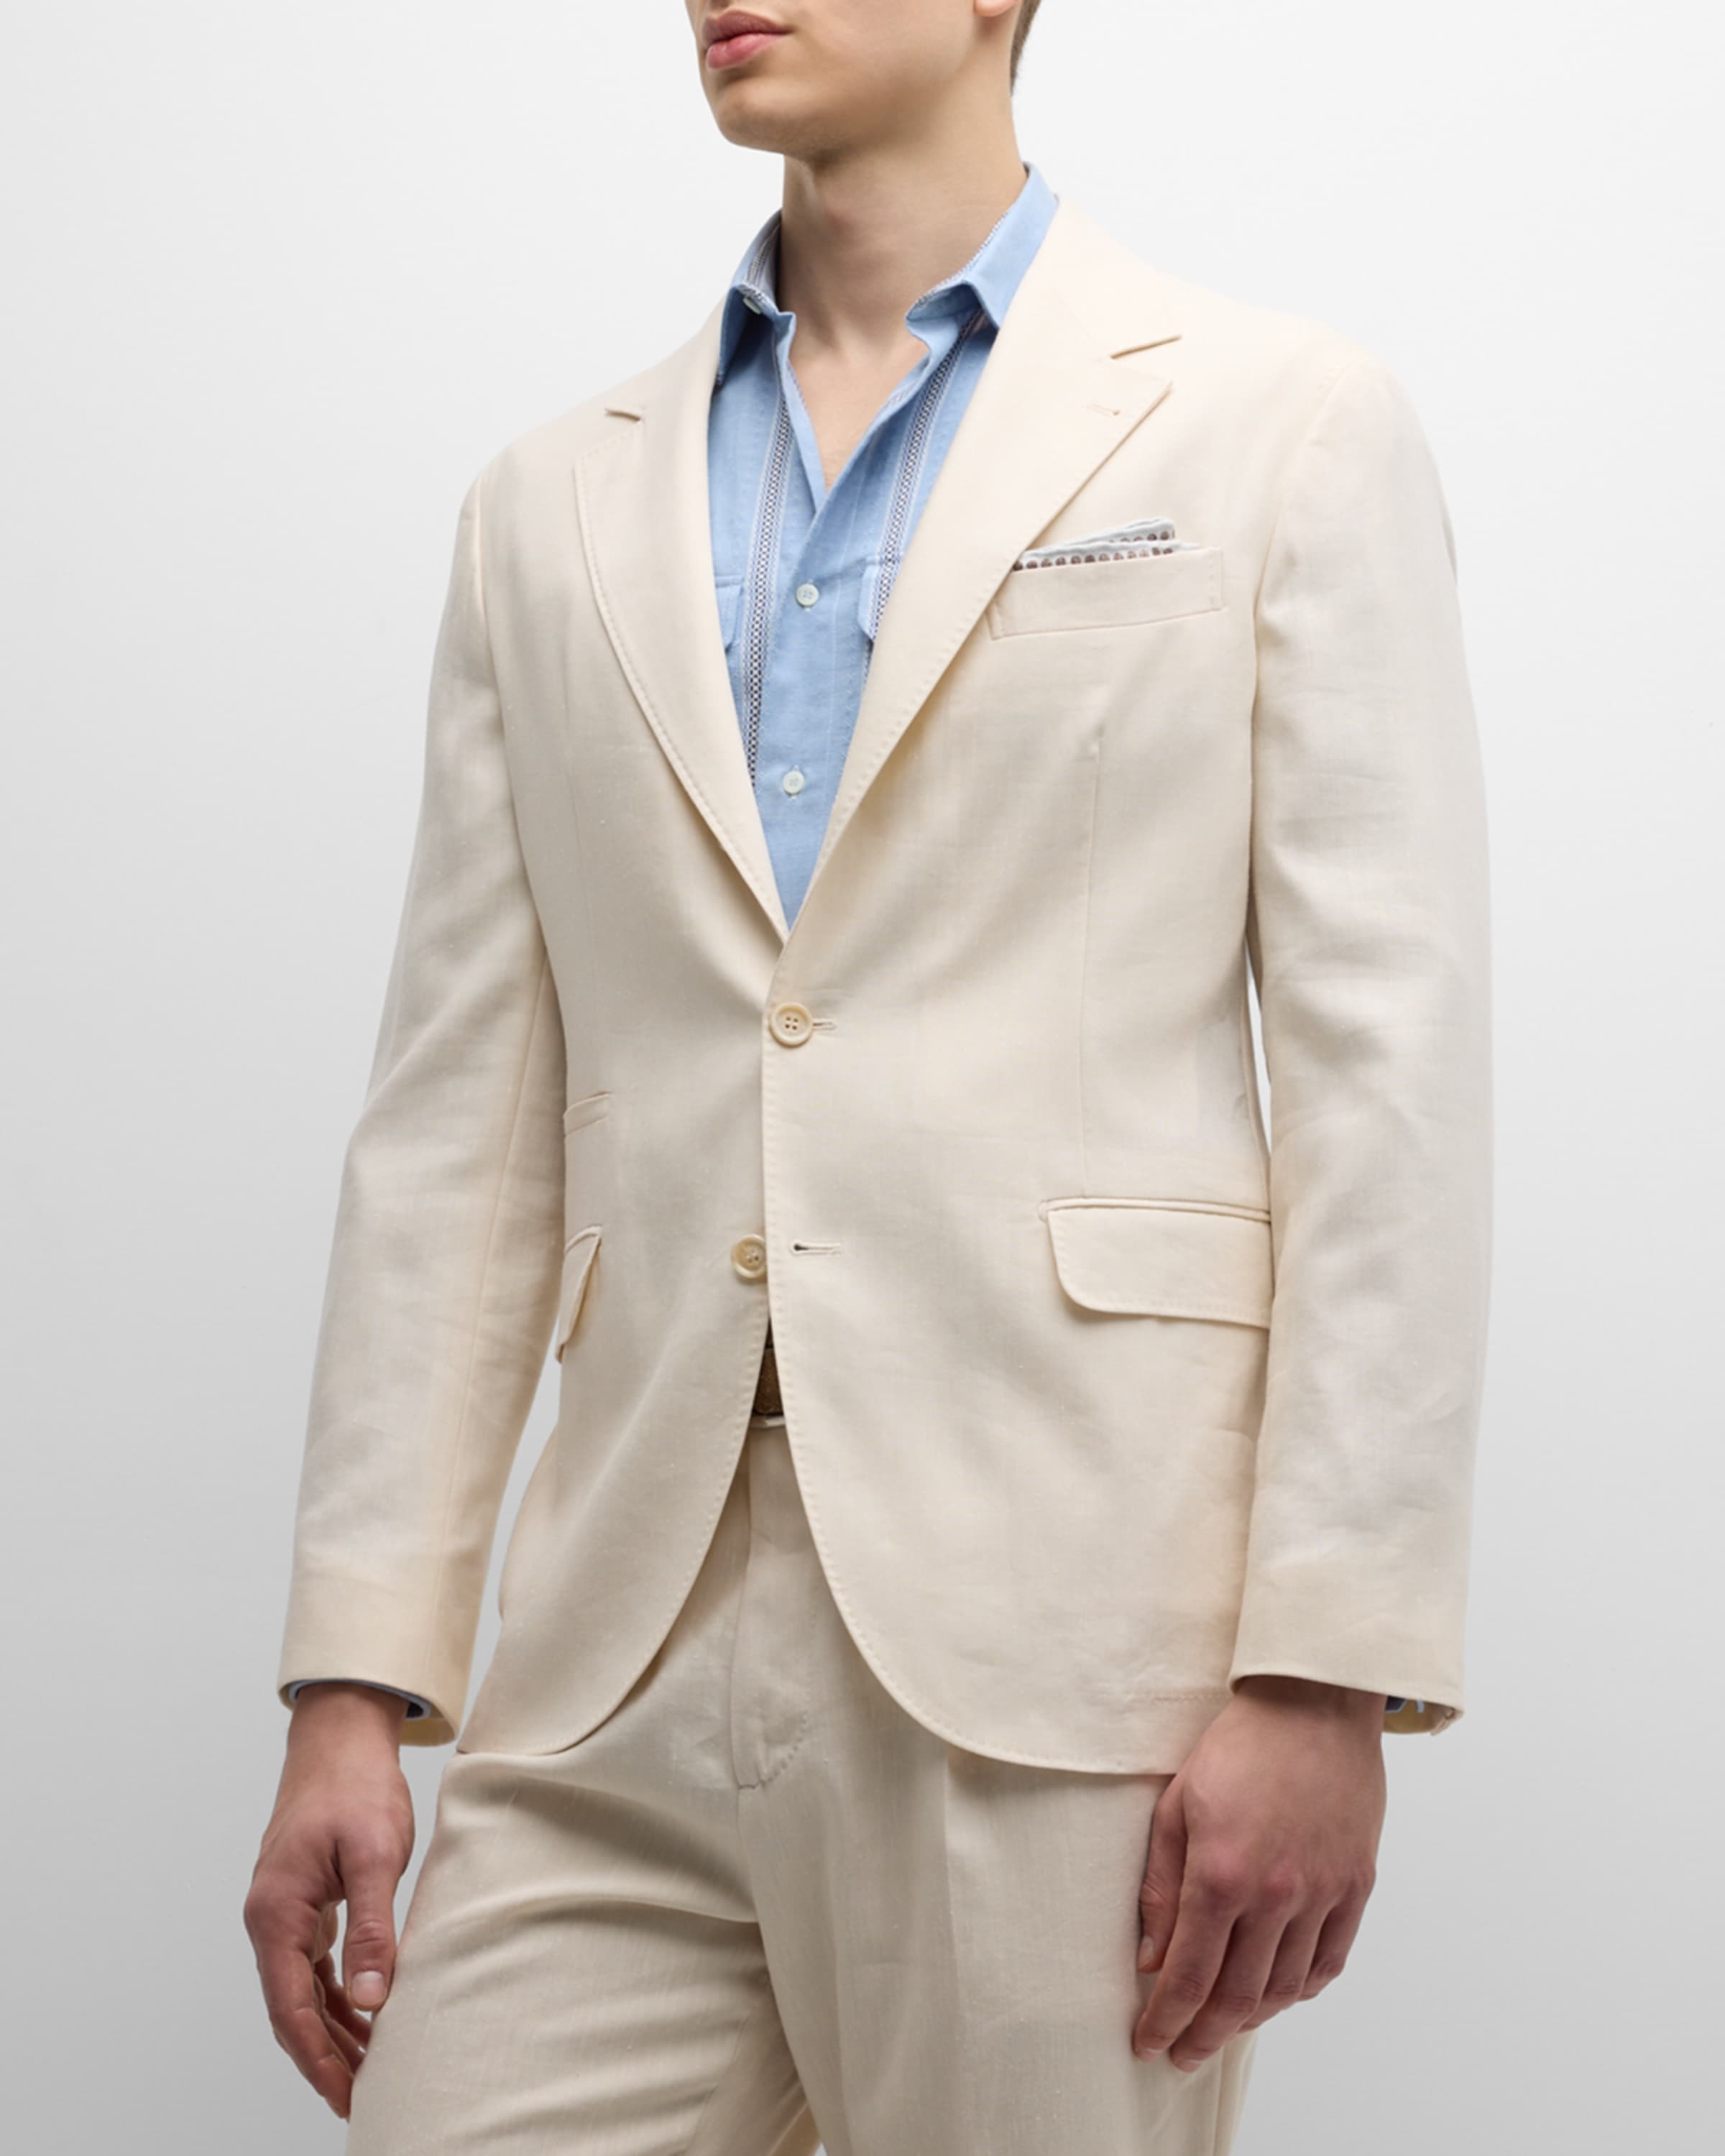 Men's Linen and Wool Solid Suit - 1